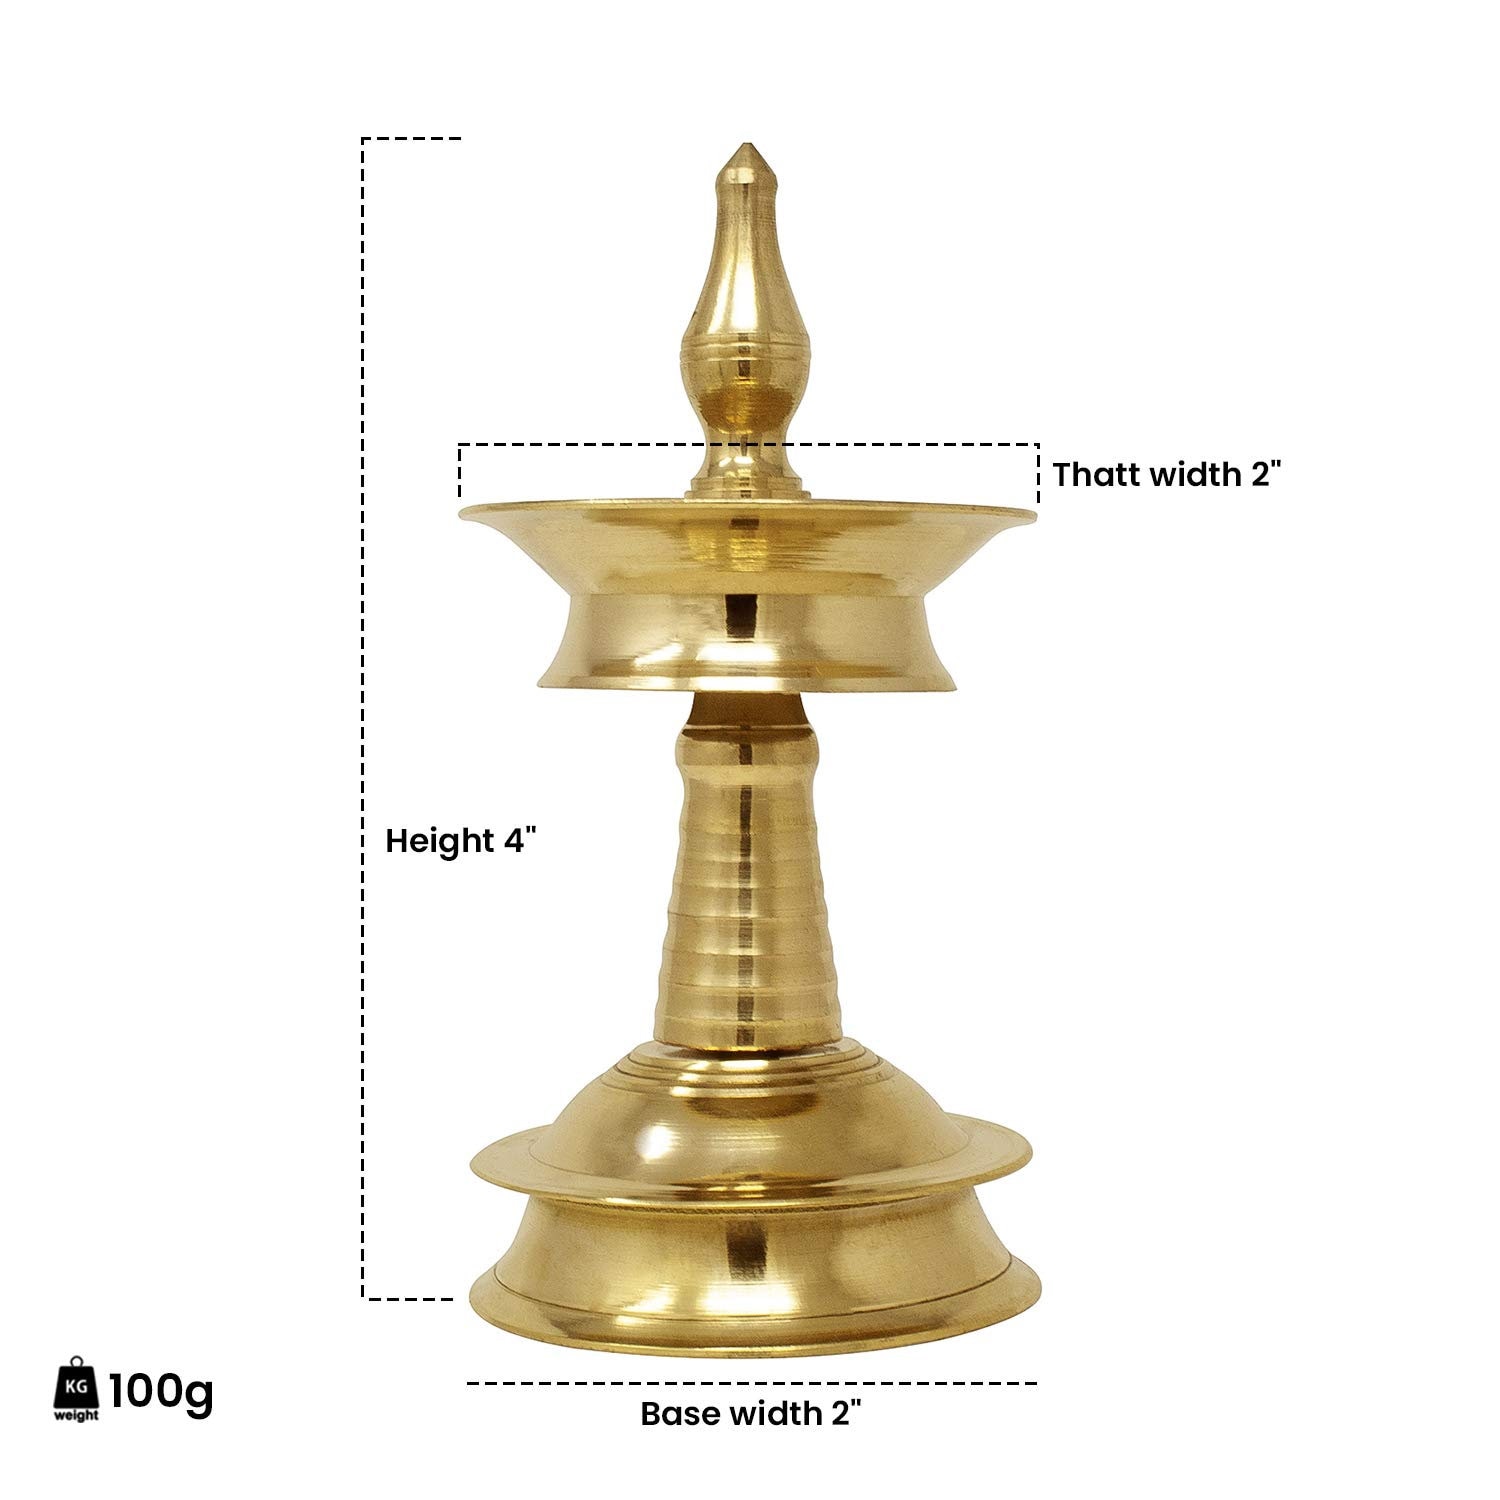 Nilavilakku Kerala Brass Oil Lamp for Pooja at Home, Office or